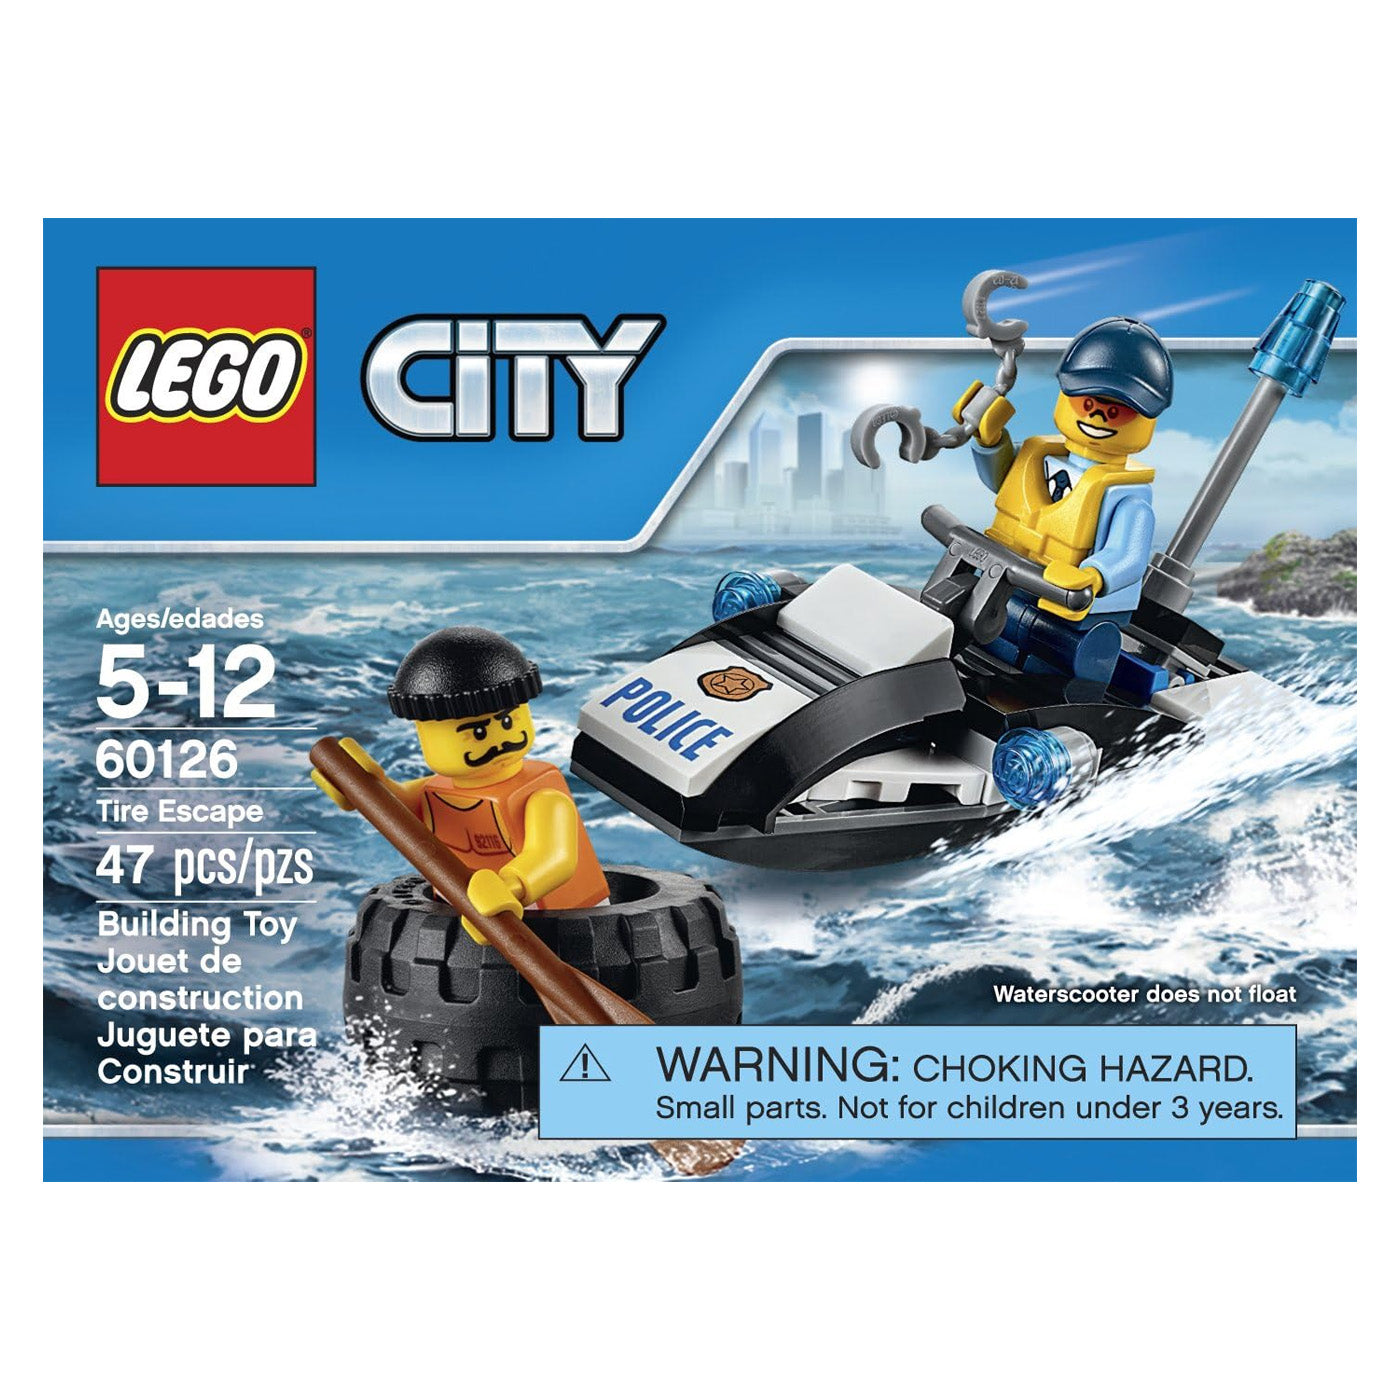 LEGO City: Tire Escape Set 60126